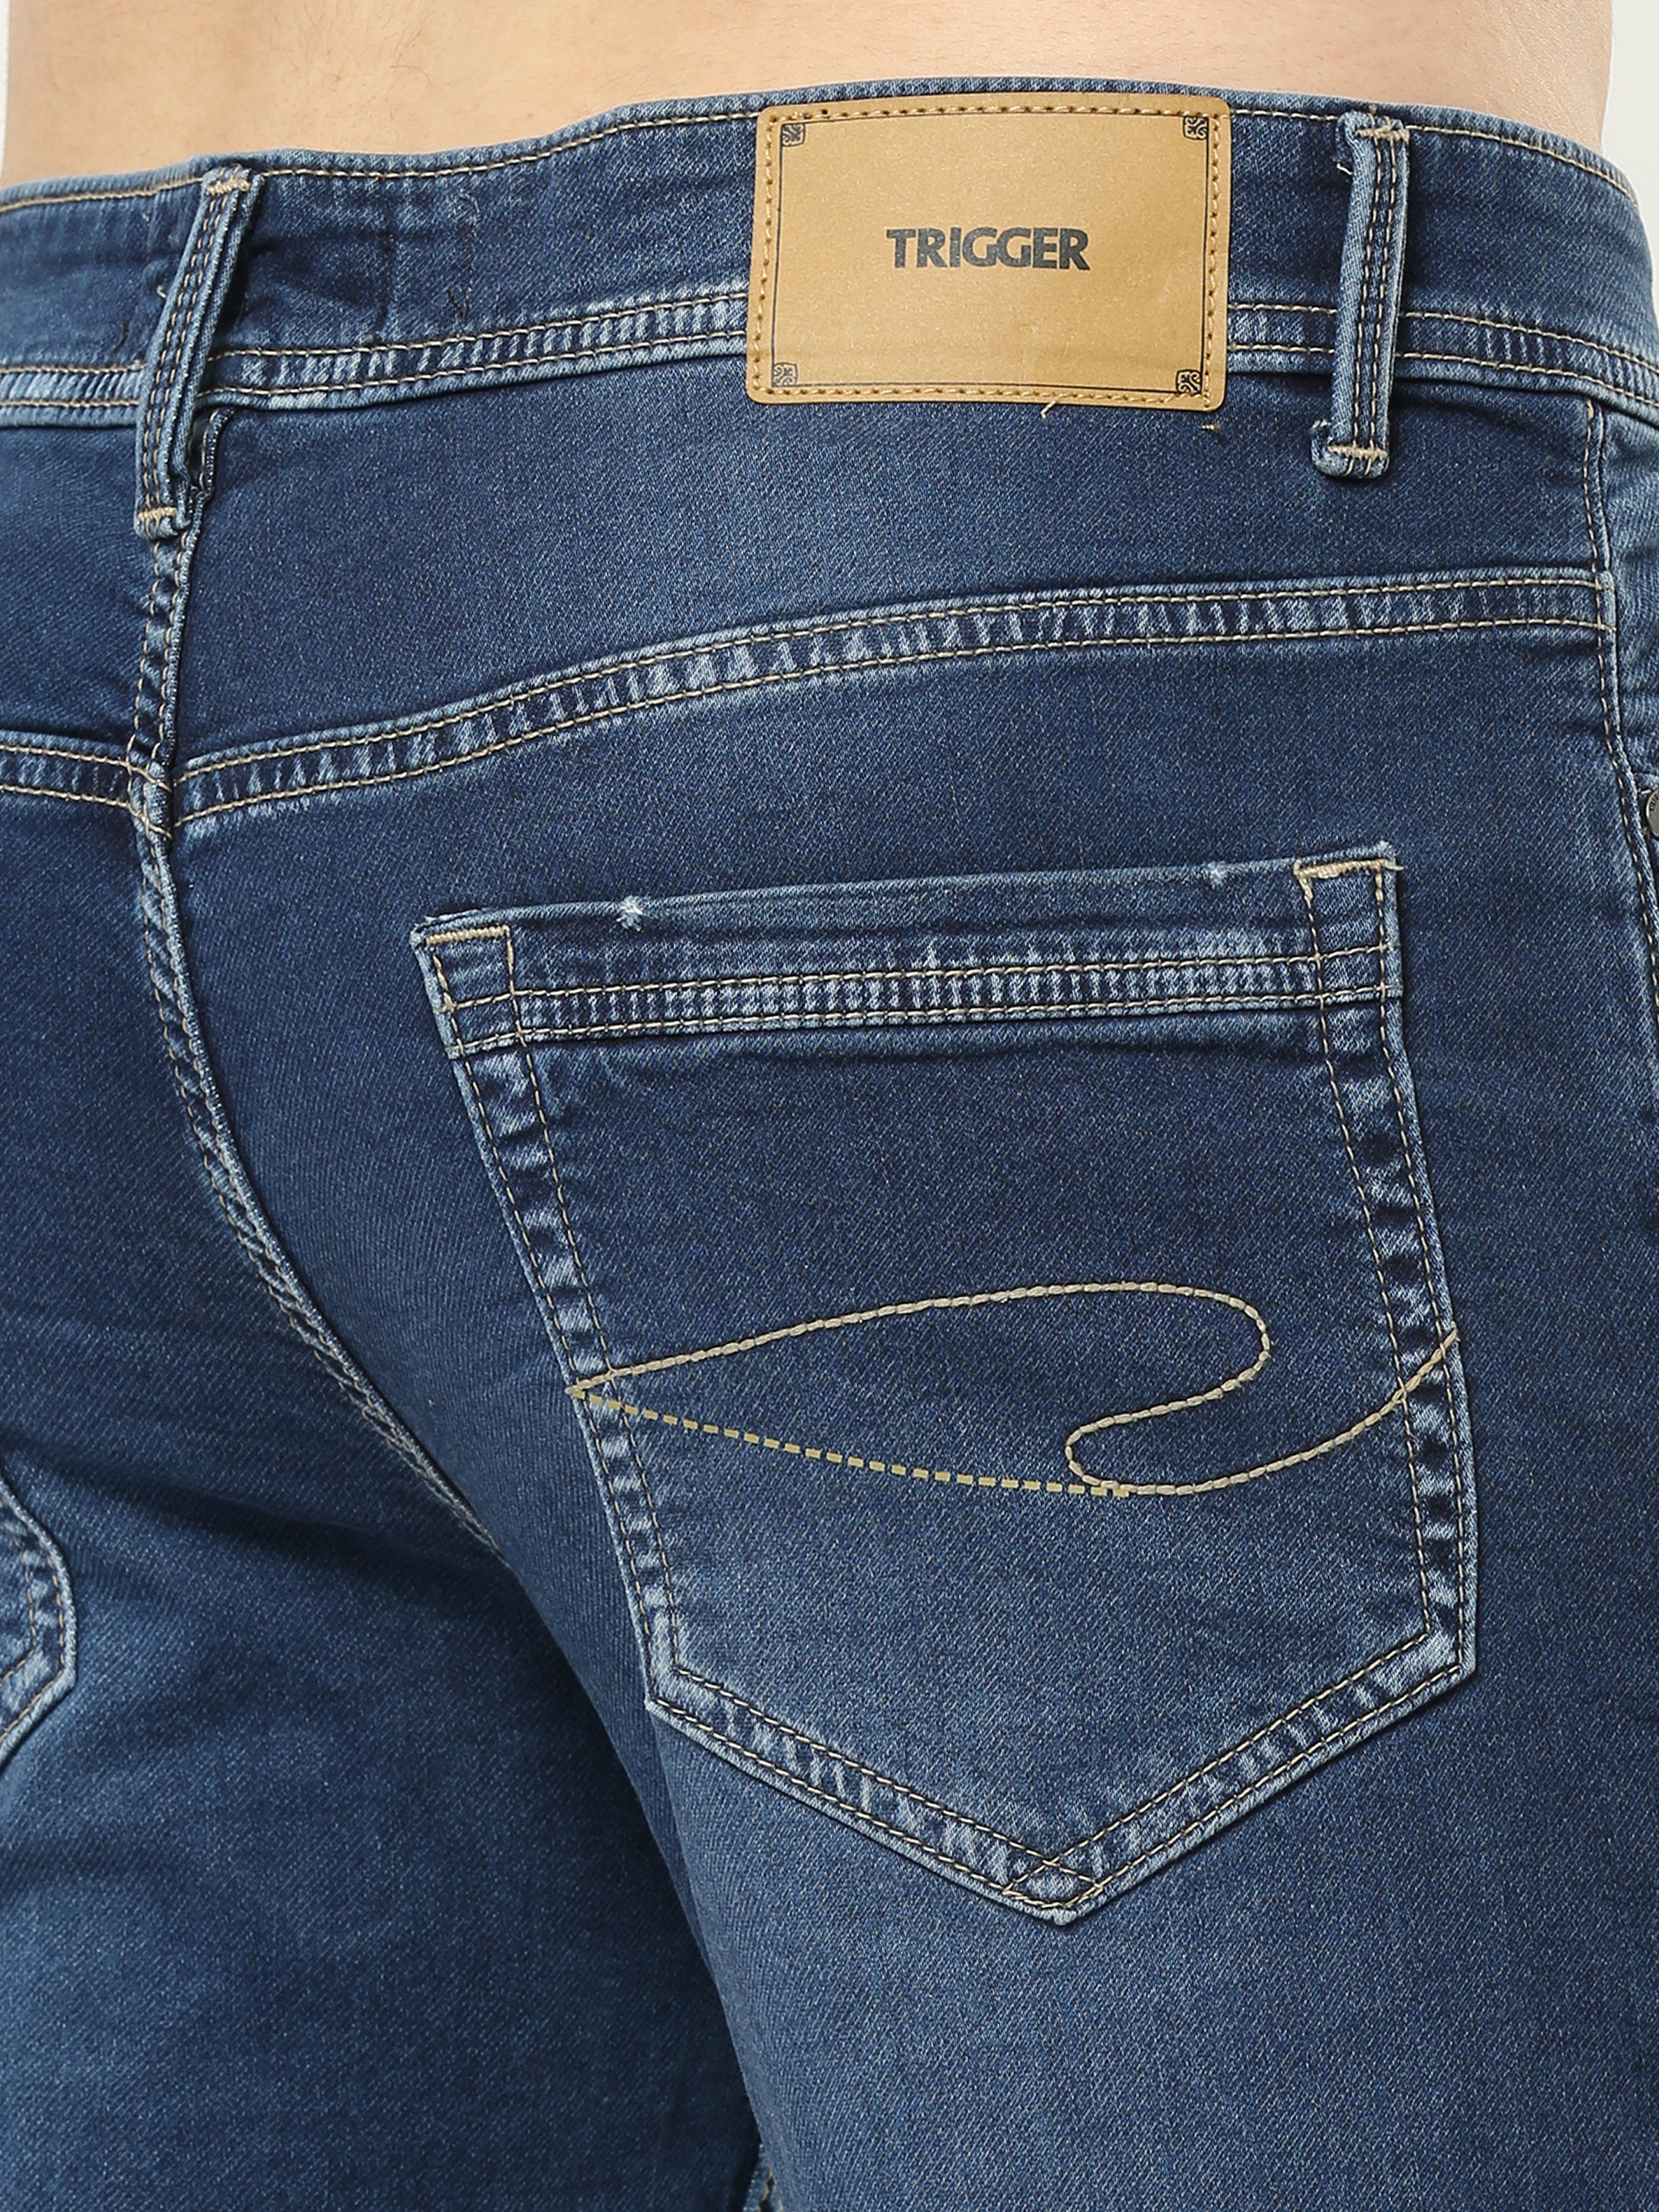 UltimaFit Men's Slim Fit Jeans